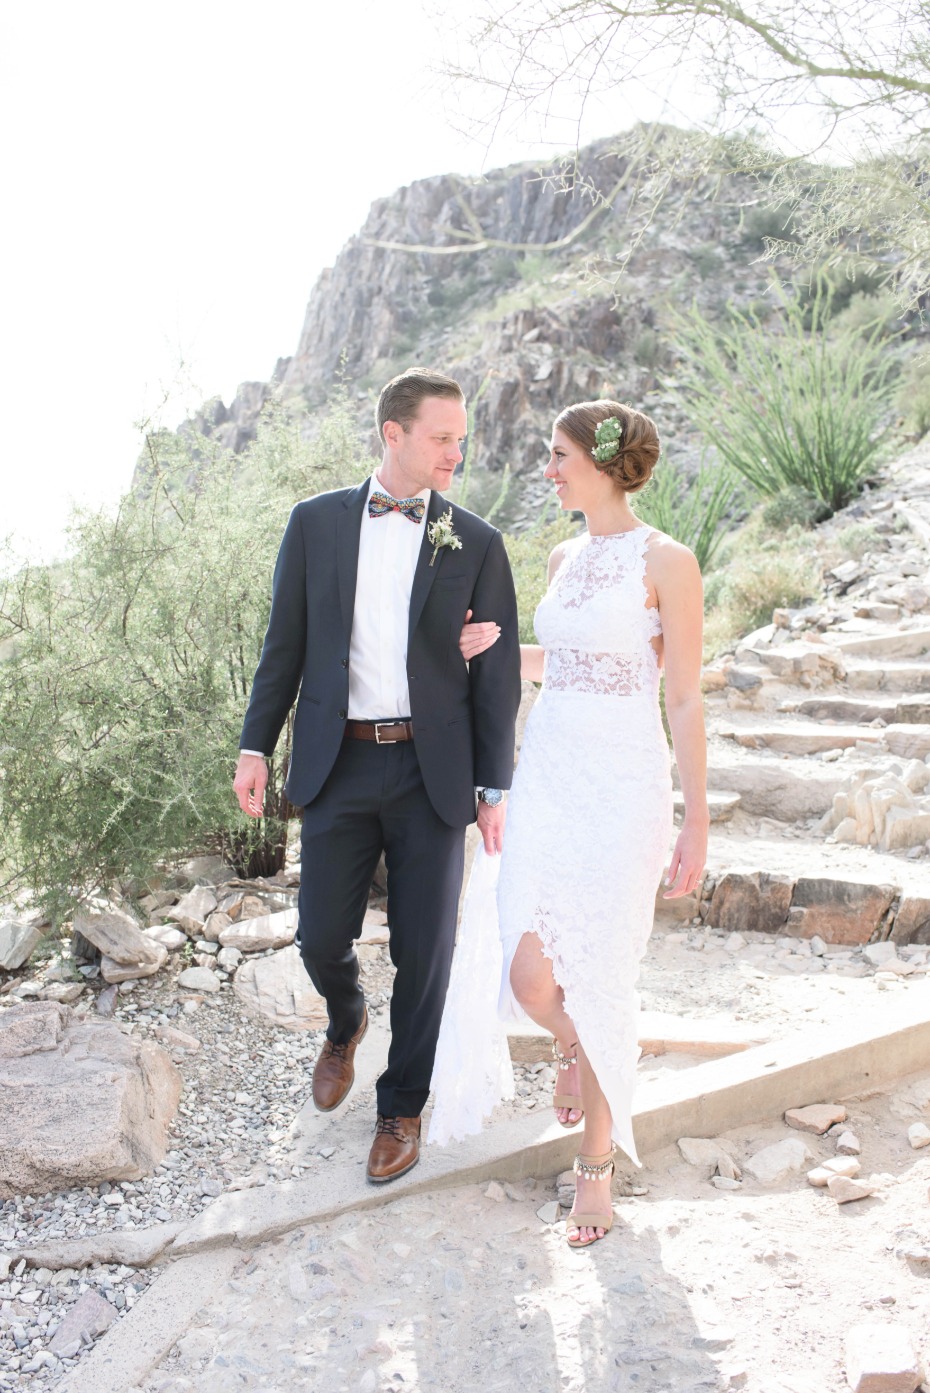 Gorgeous desert wedding in Arizona